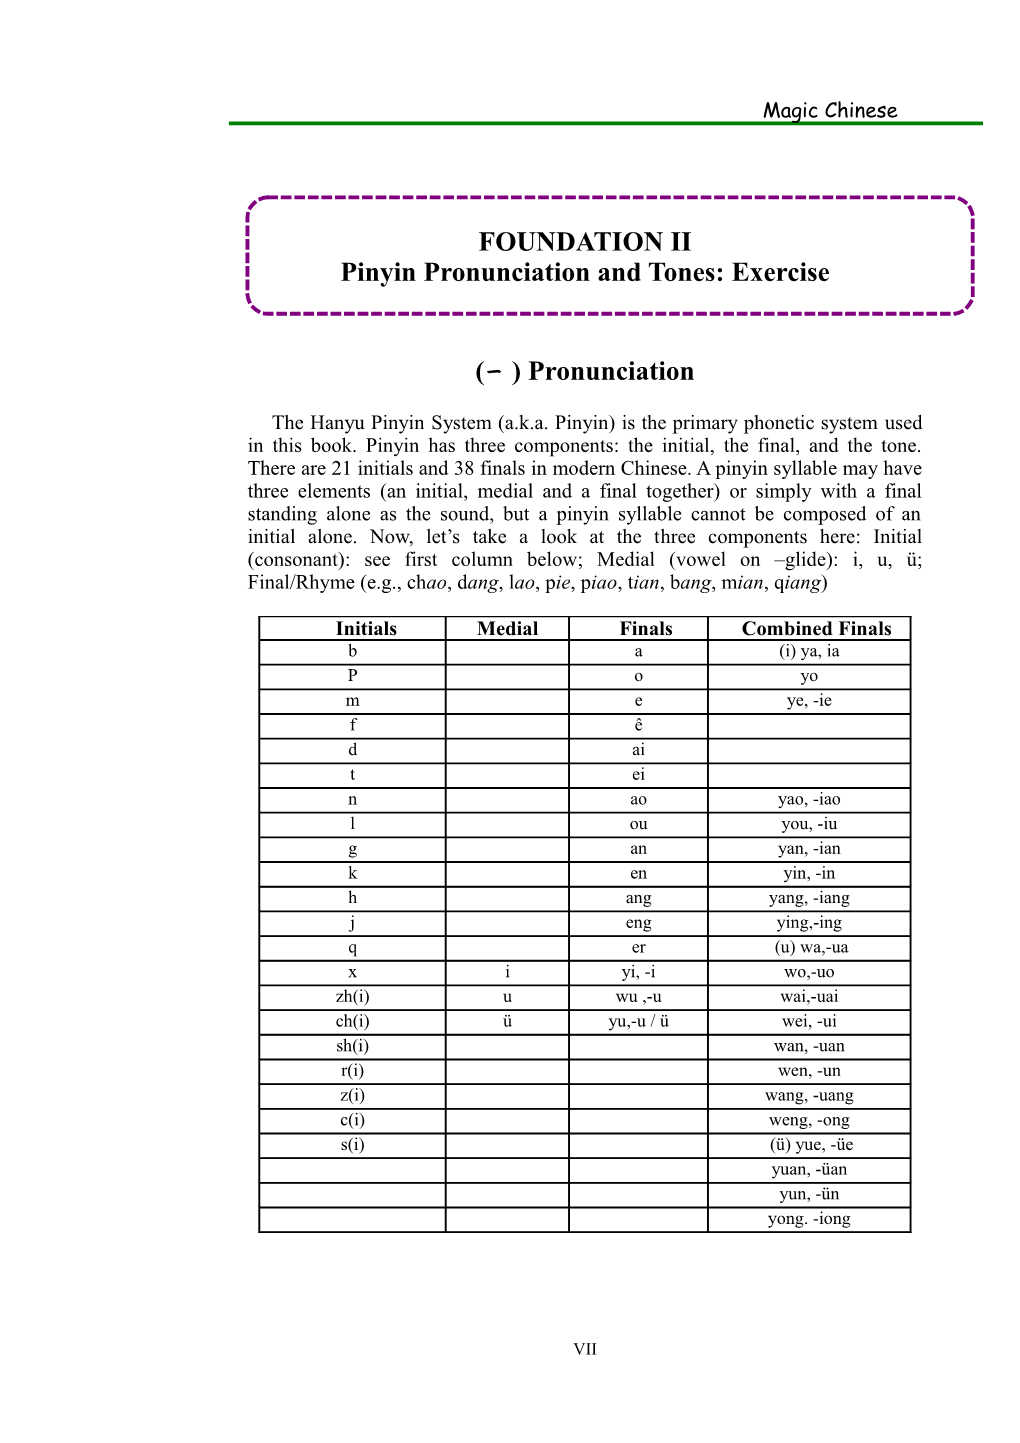 Pinyin Pronunciation and Tones: Exercise